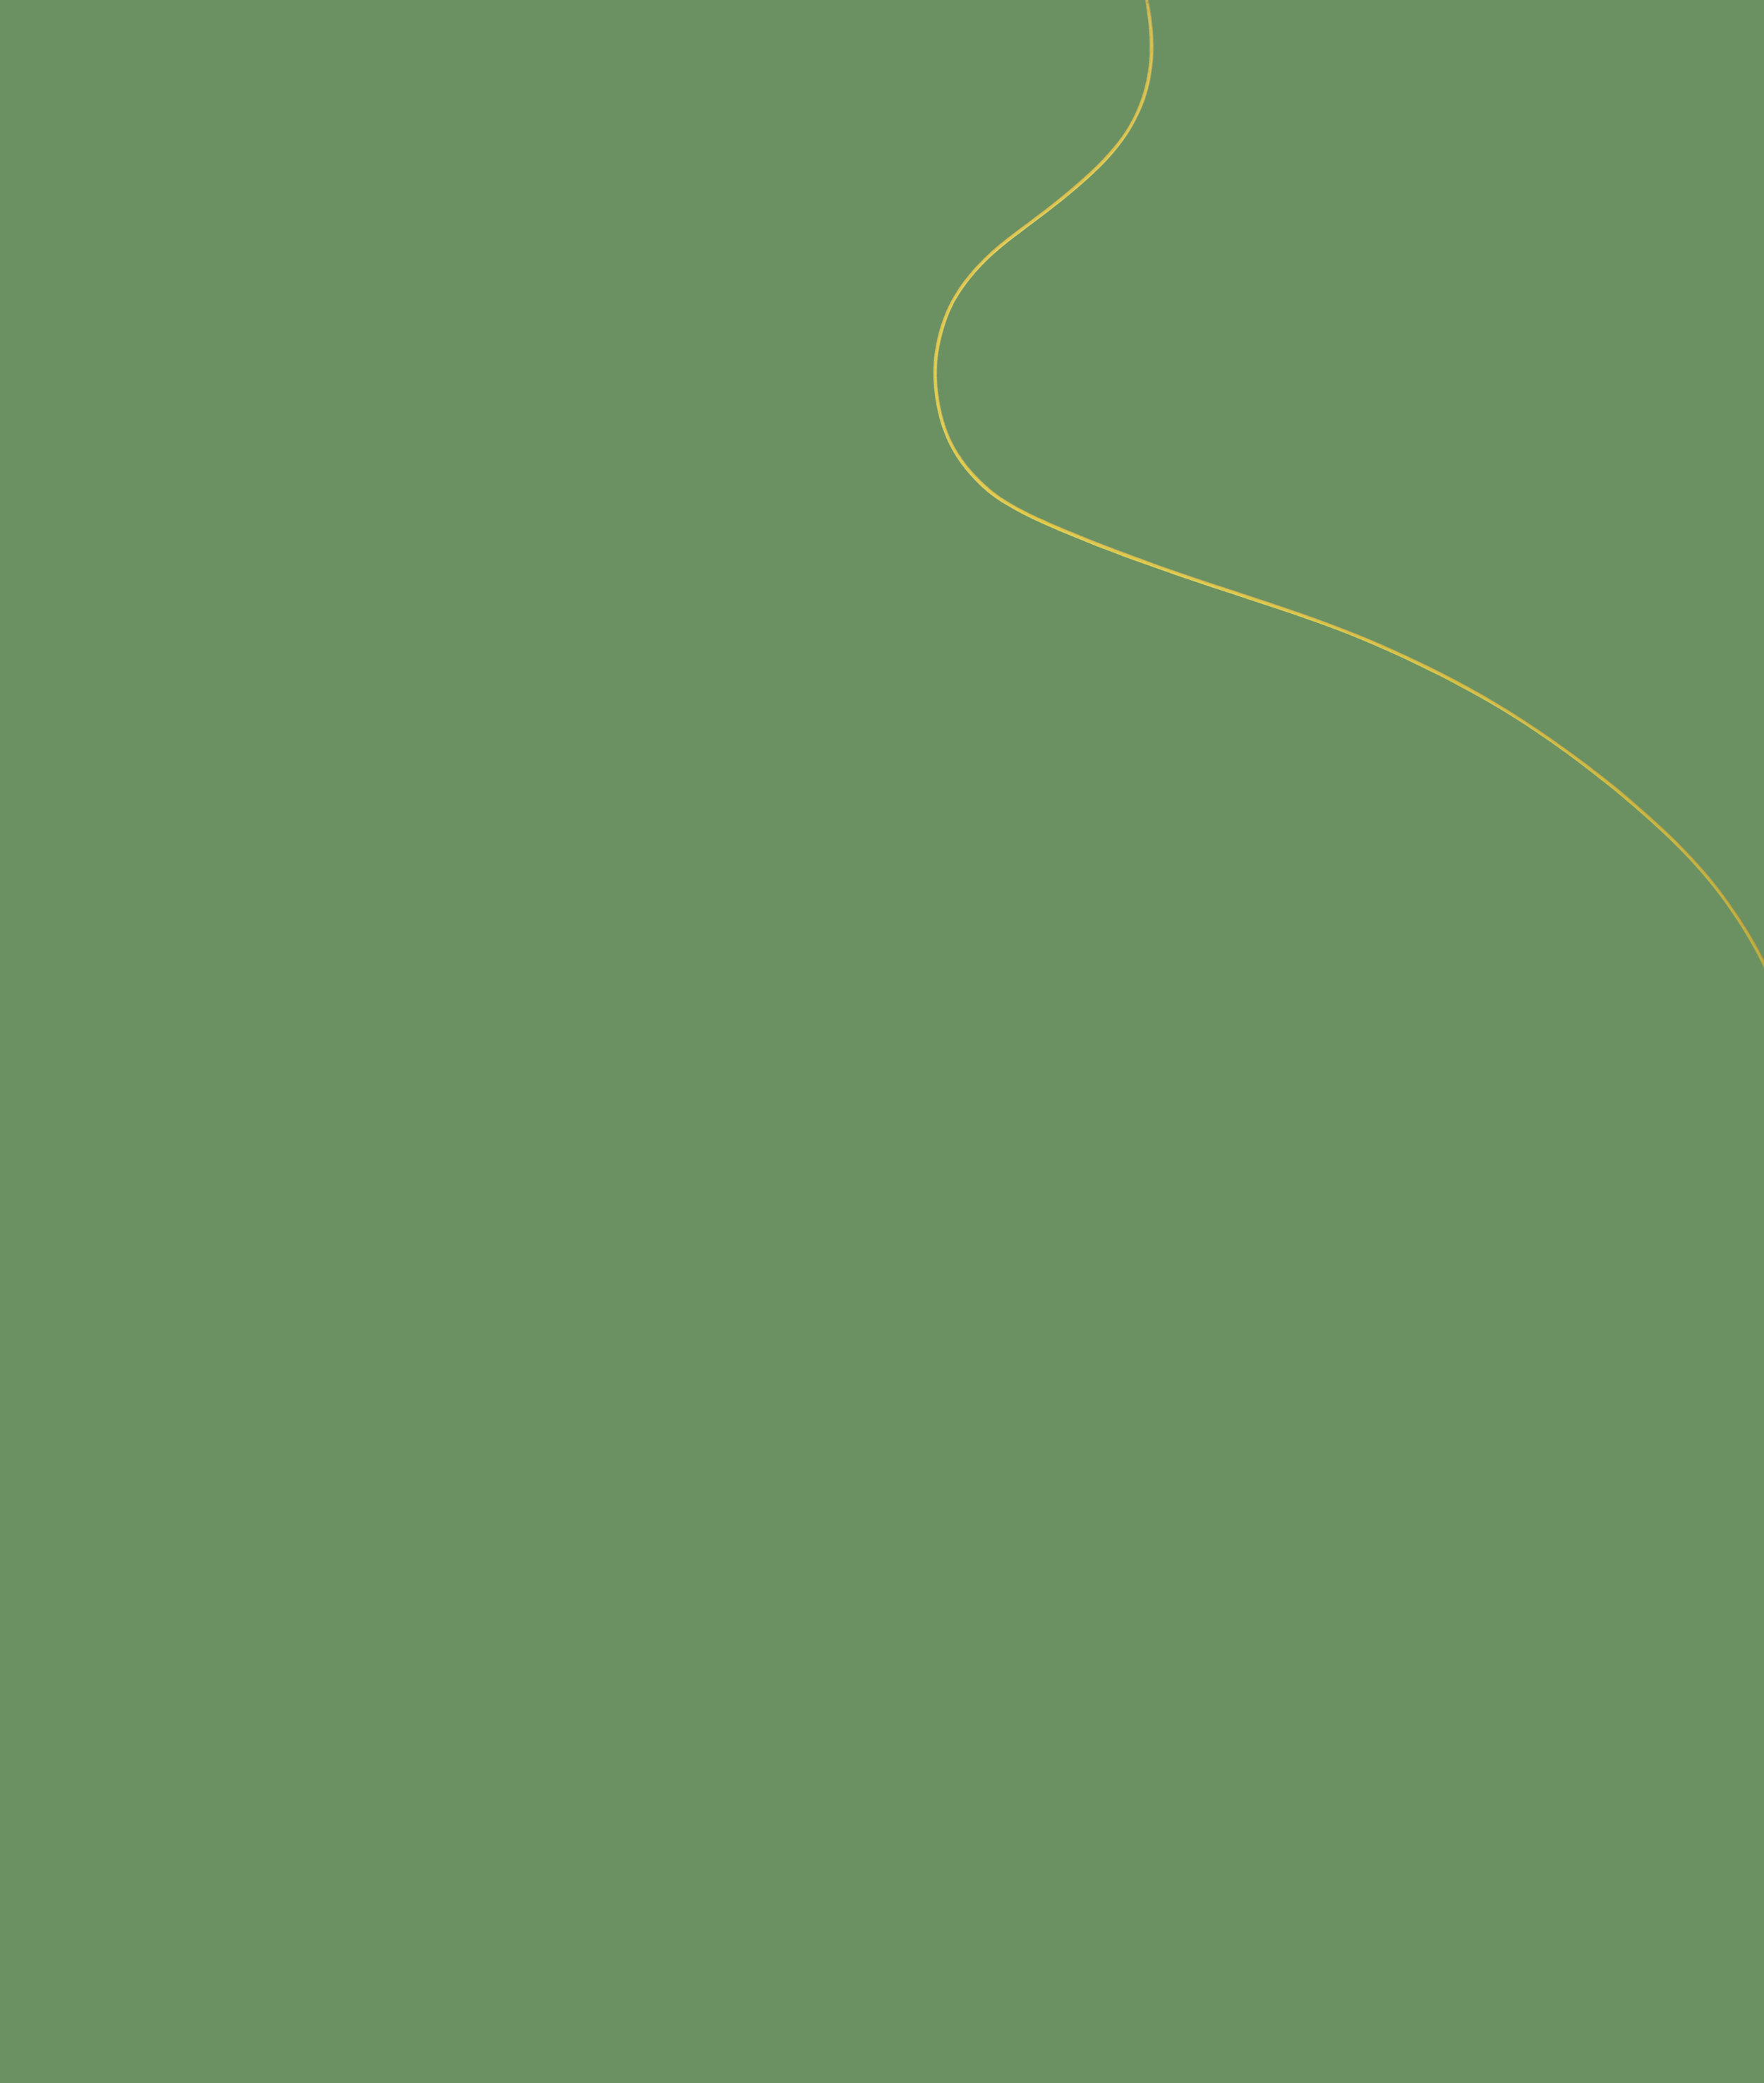  Virginia Jaramillo (American, born 1939),  Green Dawn , 1970, acrylic on canvas, 837⁄8 x 721⁄8 inches, The Joyner/Giuffrida Collection. © Virginia Jaramillo. Image courtesy of the artist and Hales, London and New York. Photo: Phoebe d'Heurle.  